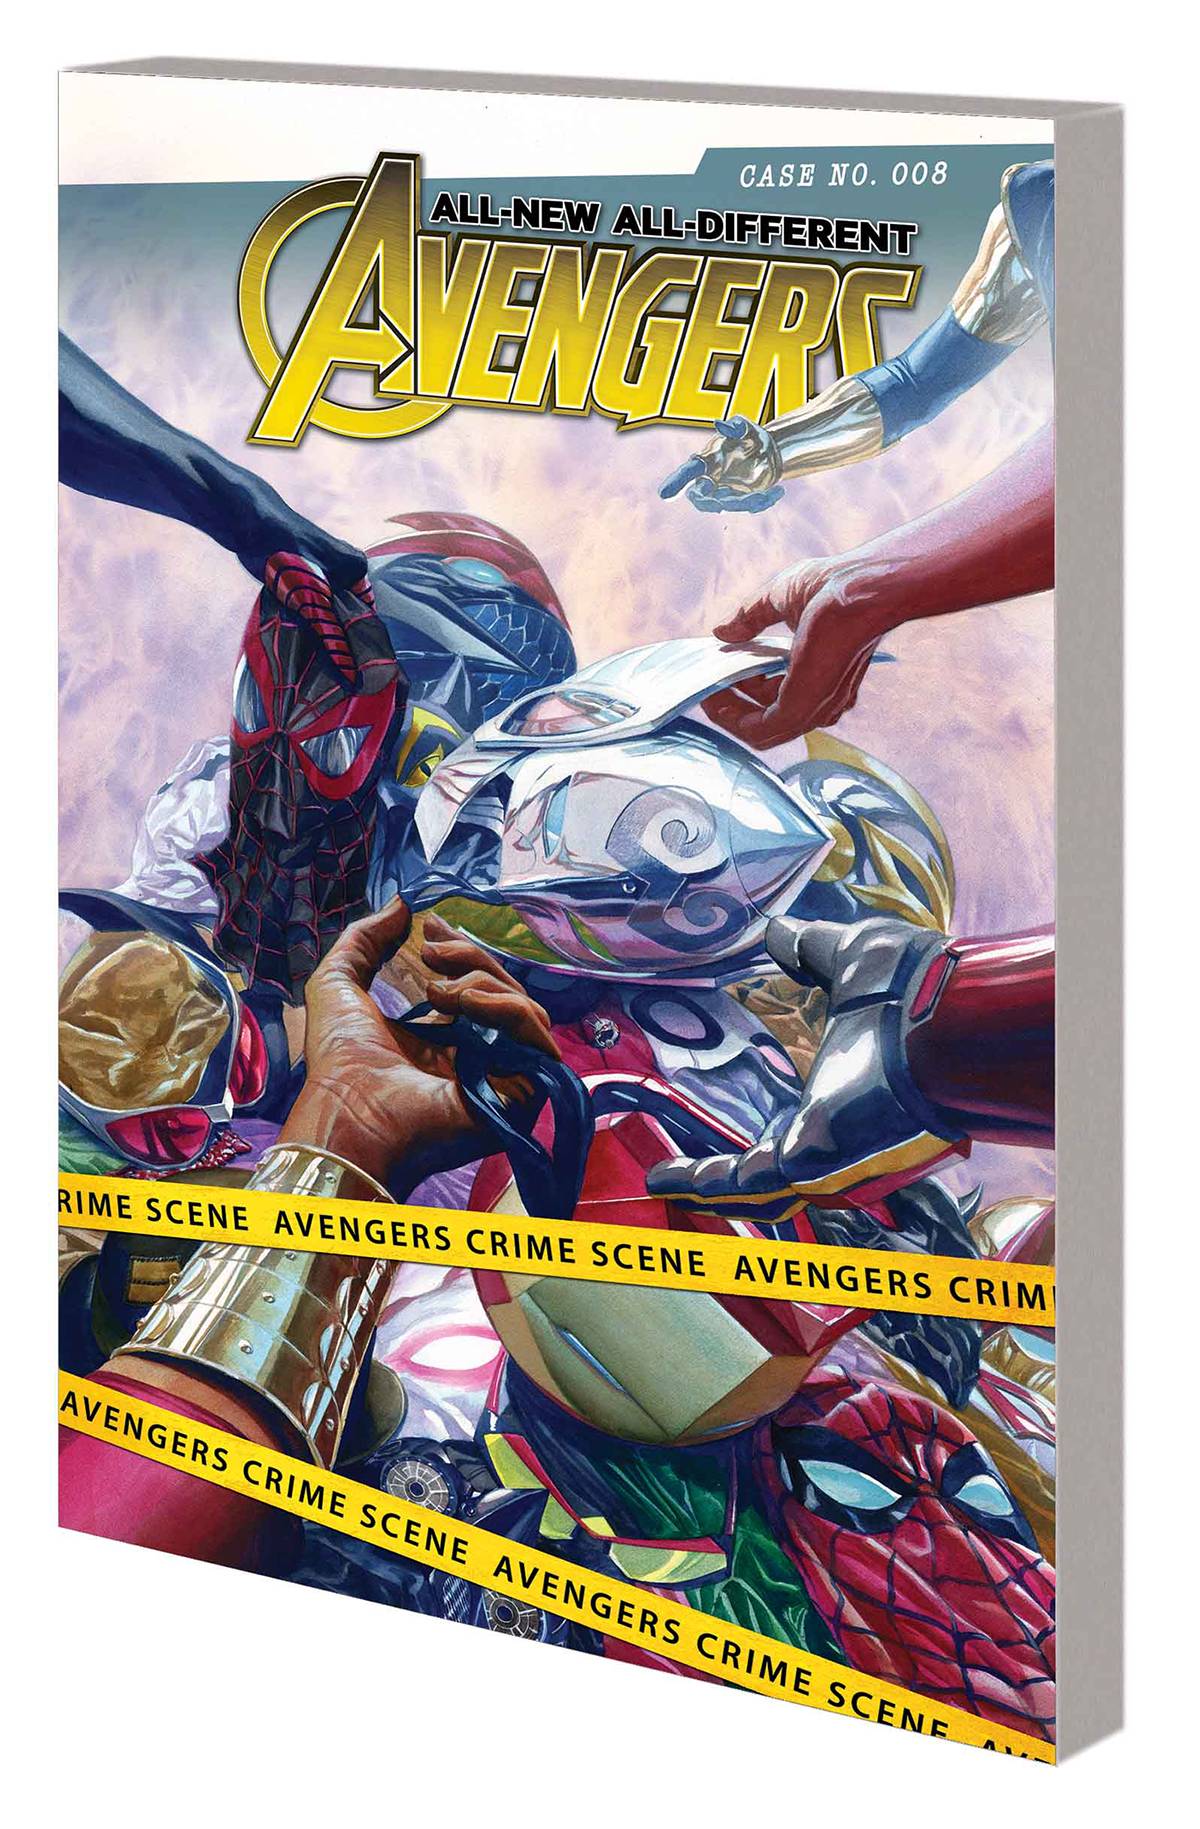 All New All Different Avengers Graphic Novel Volume 2 Family Business